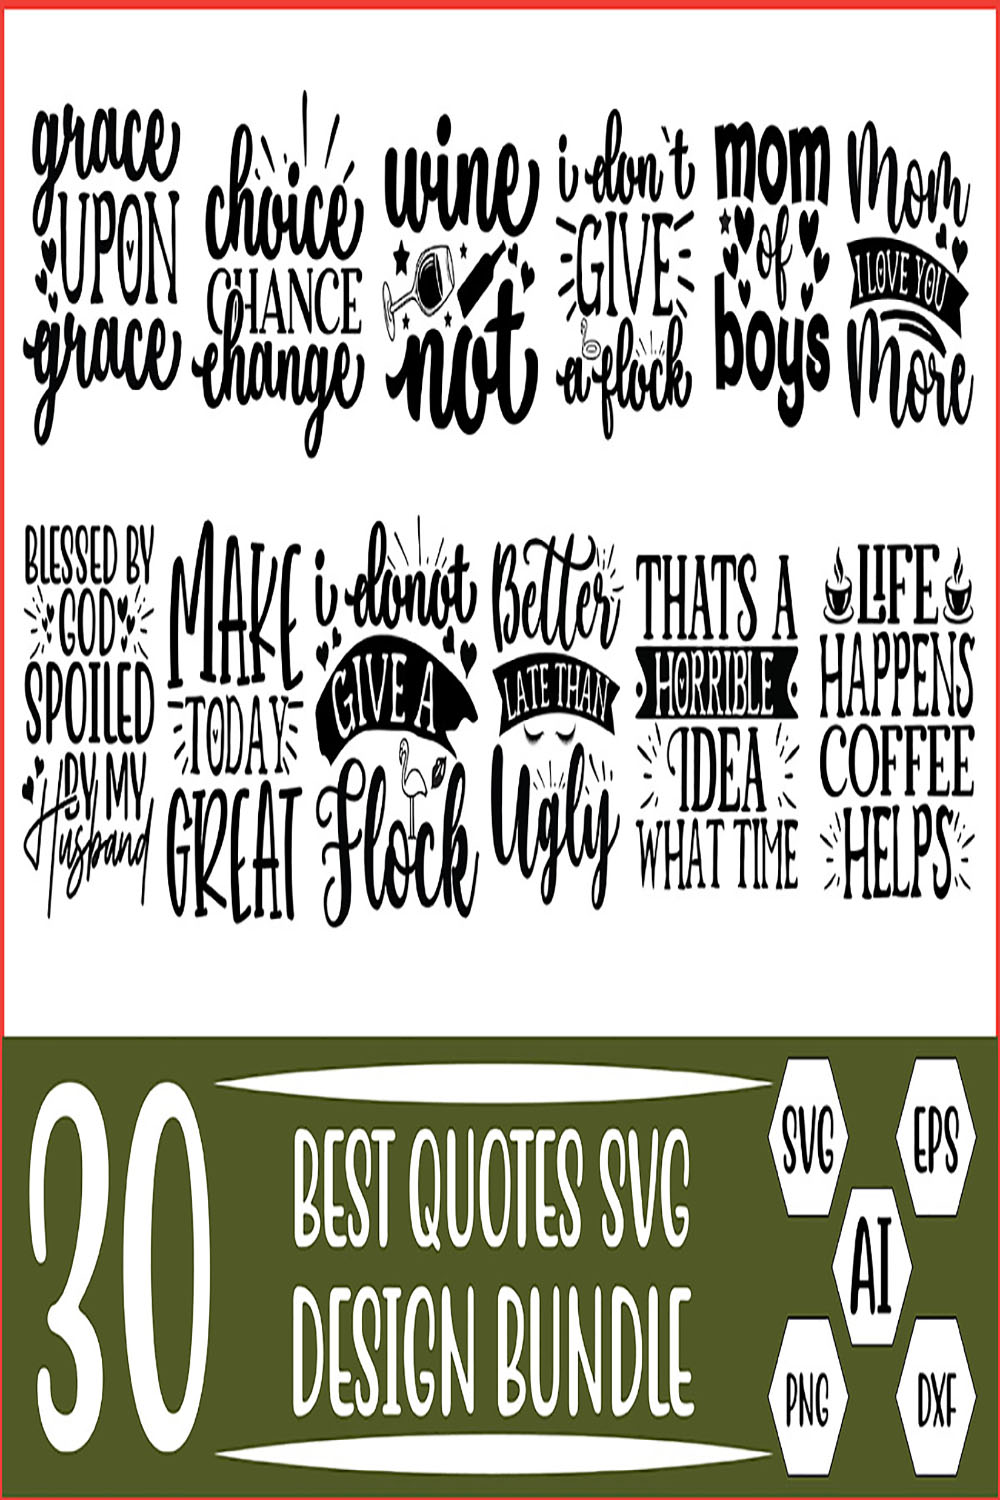 30 Best Quotes Svg Design Bundle Vector Template pinterest preview image.